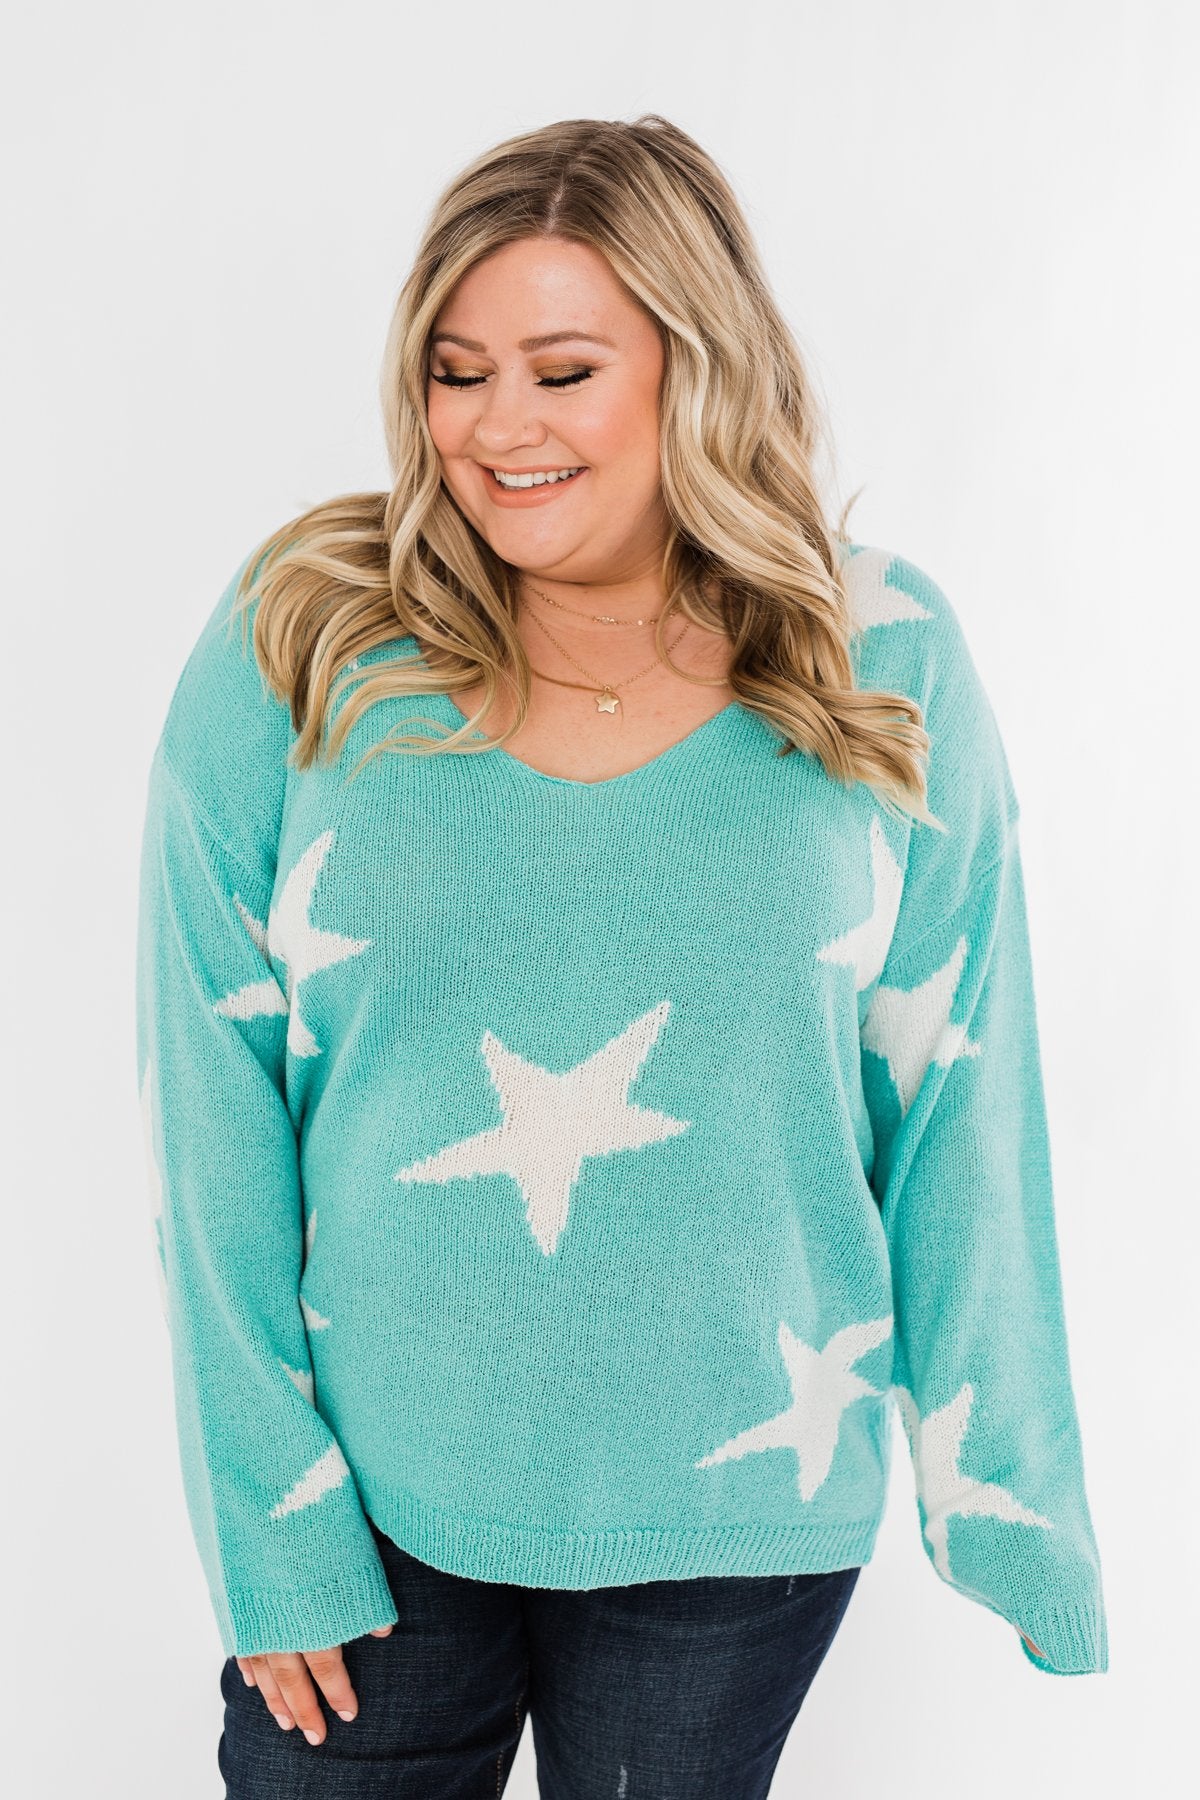 Wishing On A Star Knitted Sweater- Aqua Blue